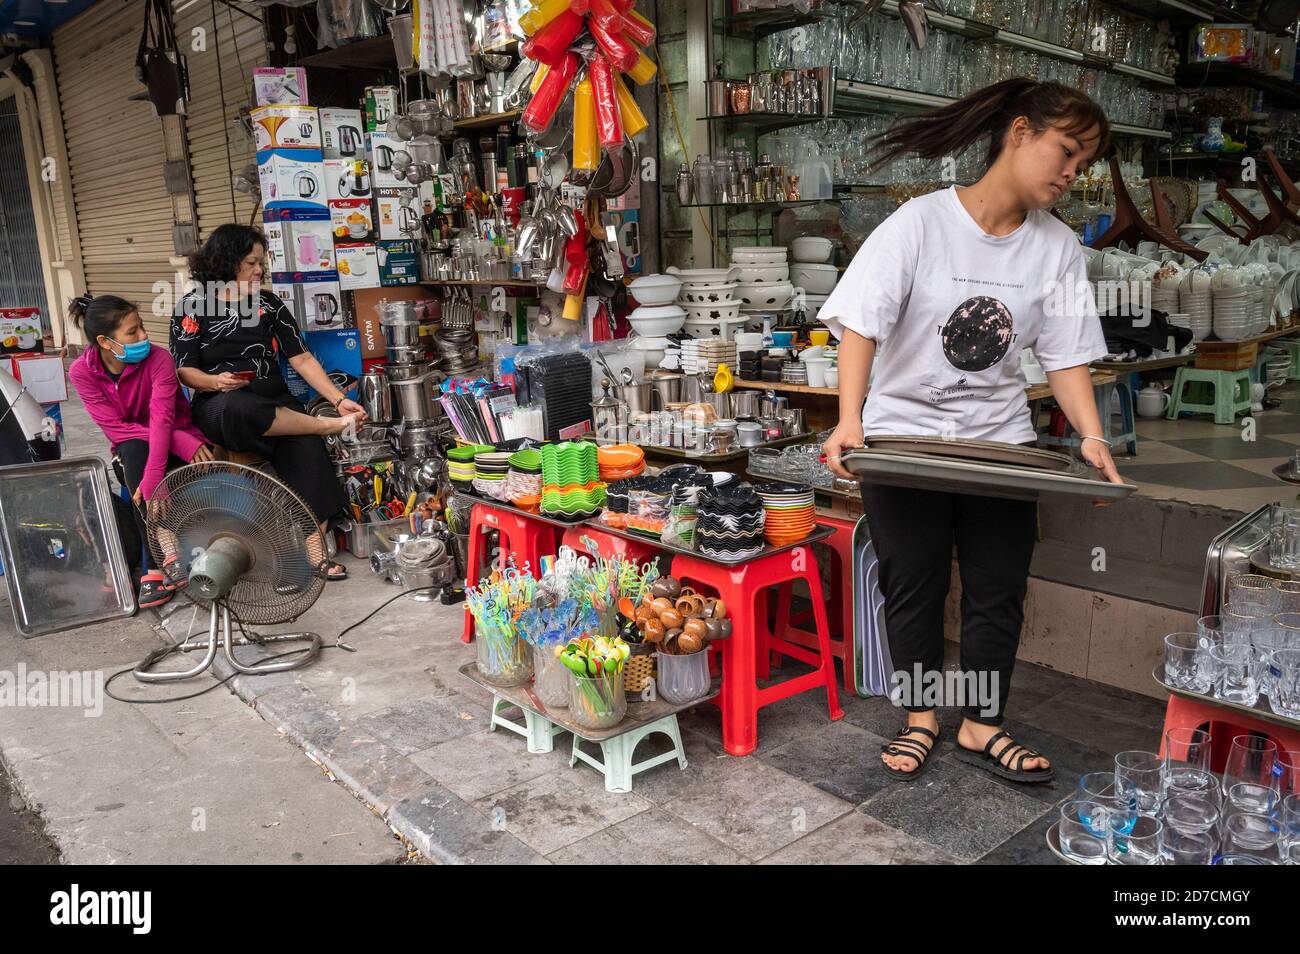 A woman setting up shop, Hanoi, Vietnam Stock Photo